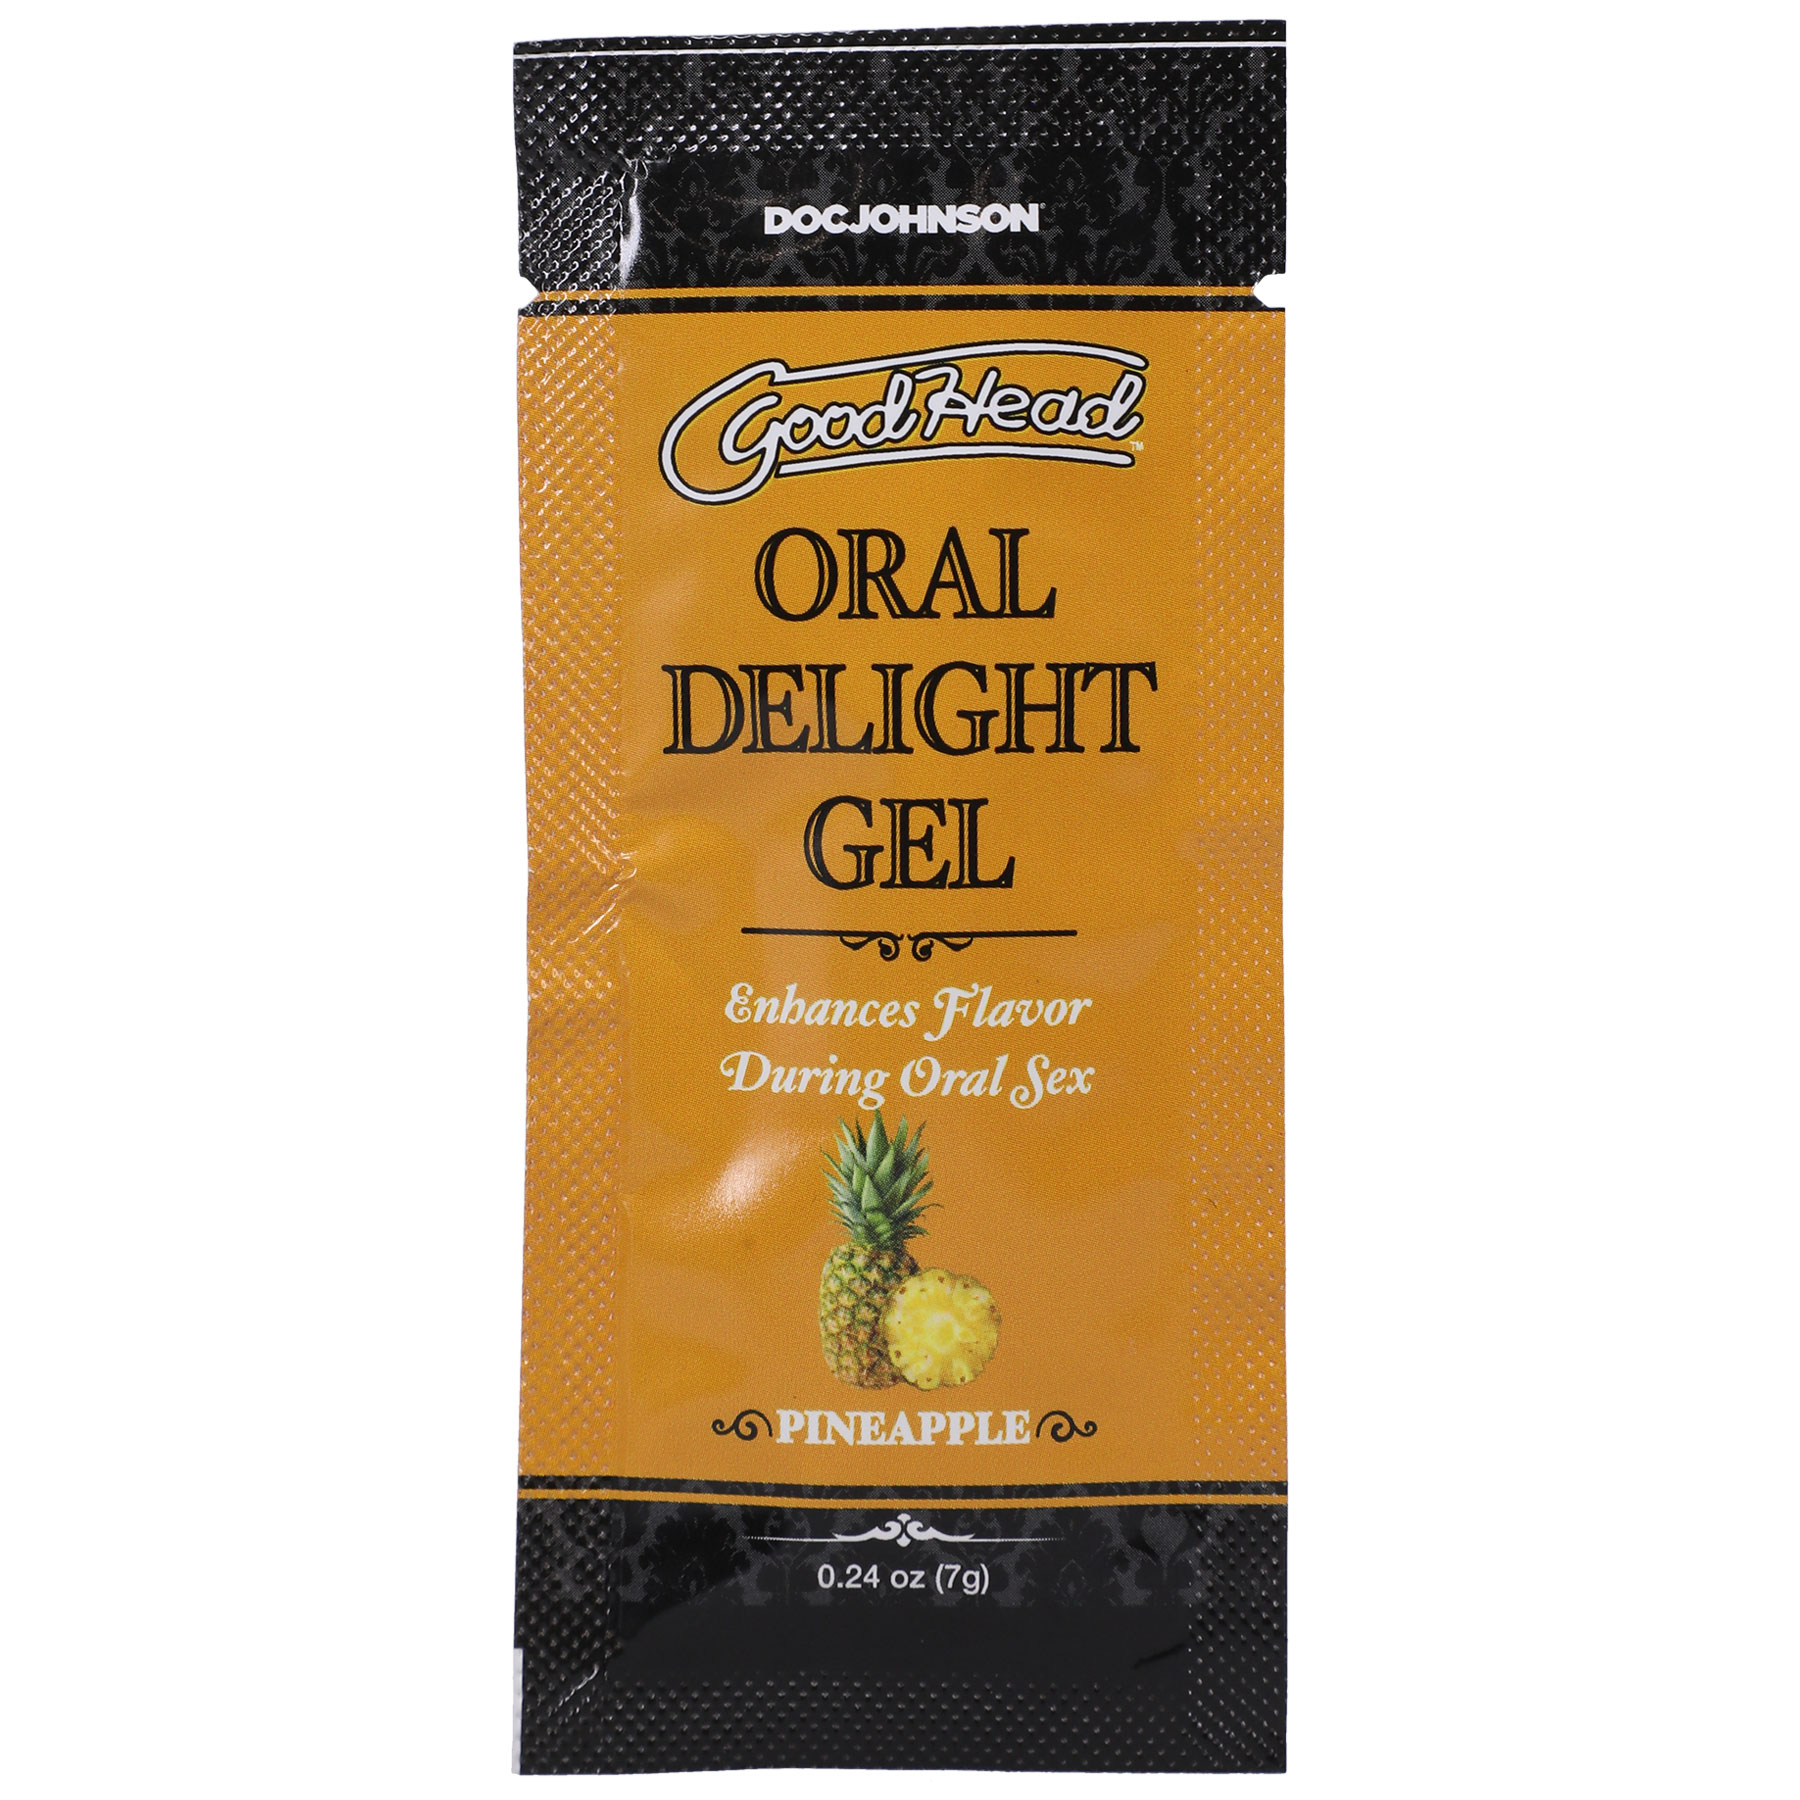 goodhead oral delight gel pineapple . oz 